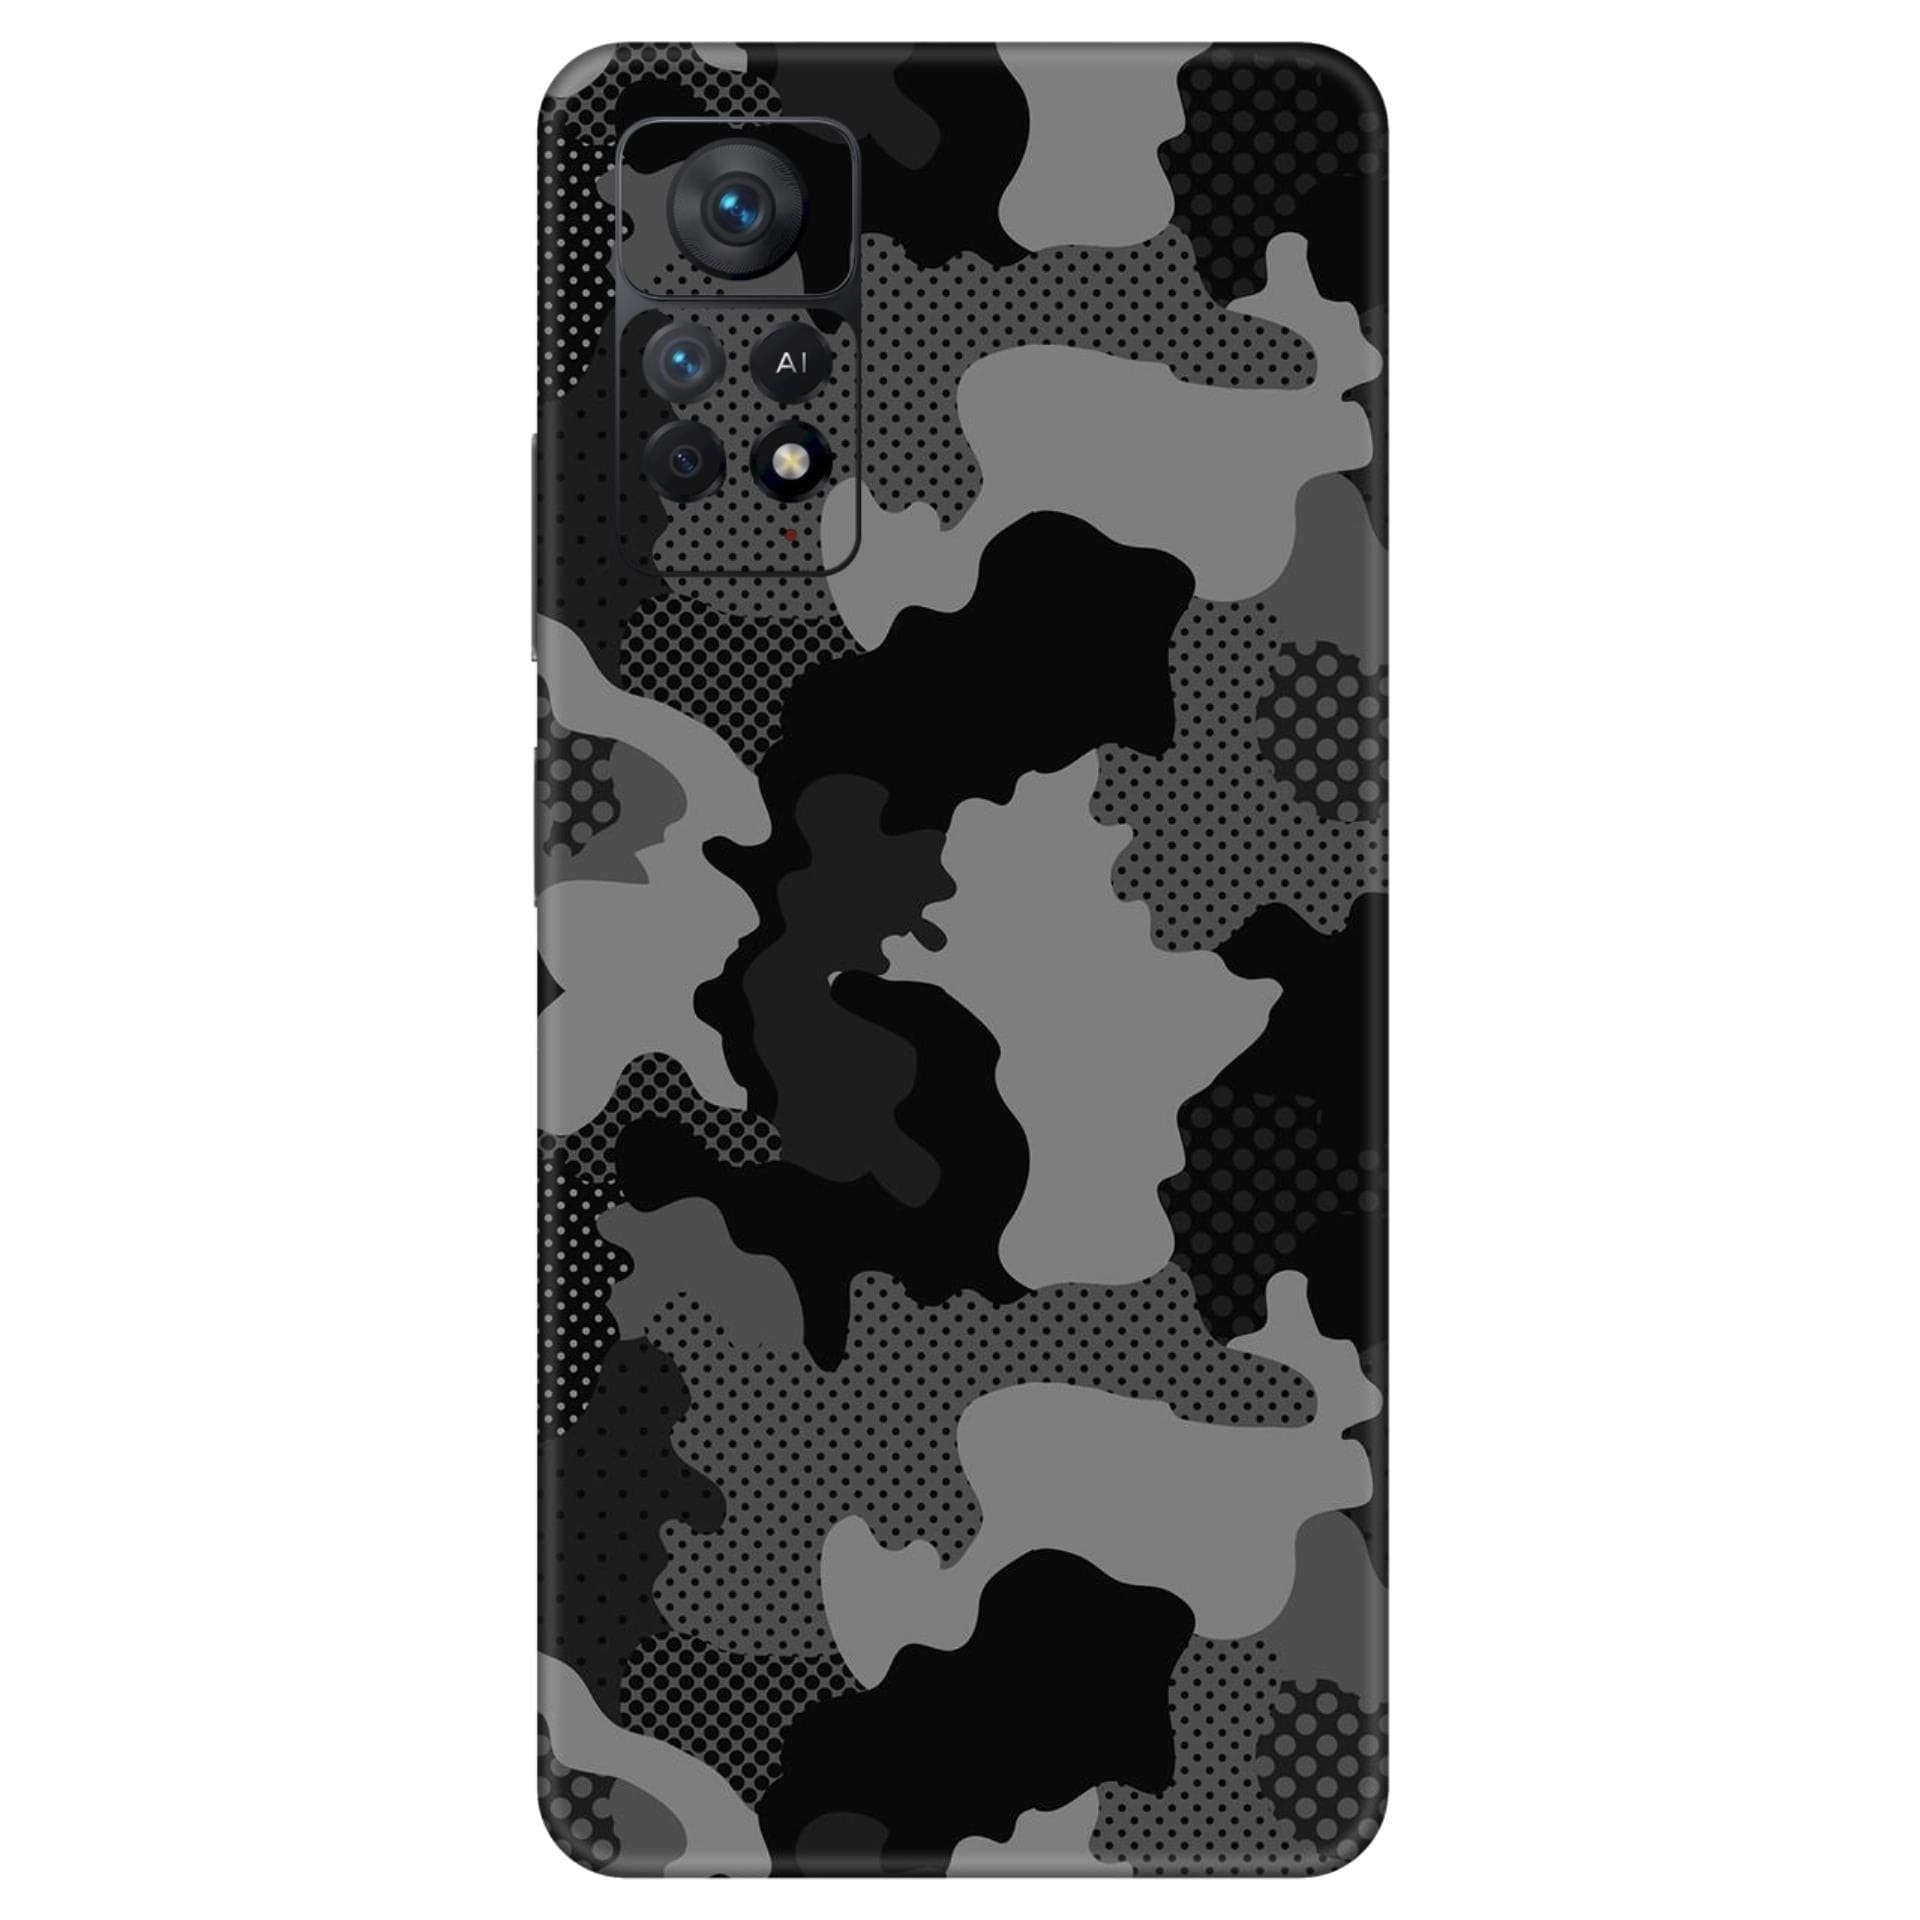 Redmi Note 11 Pro Plus Military Black Camo skins